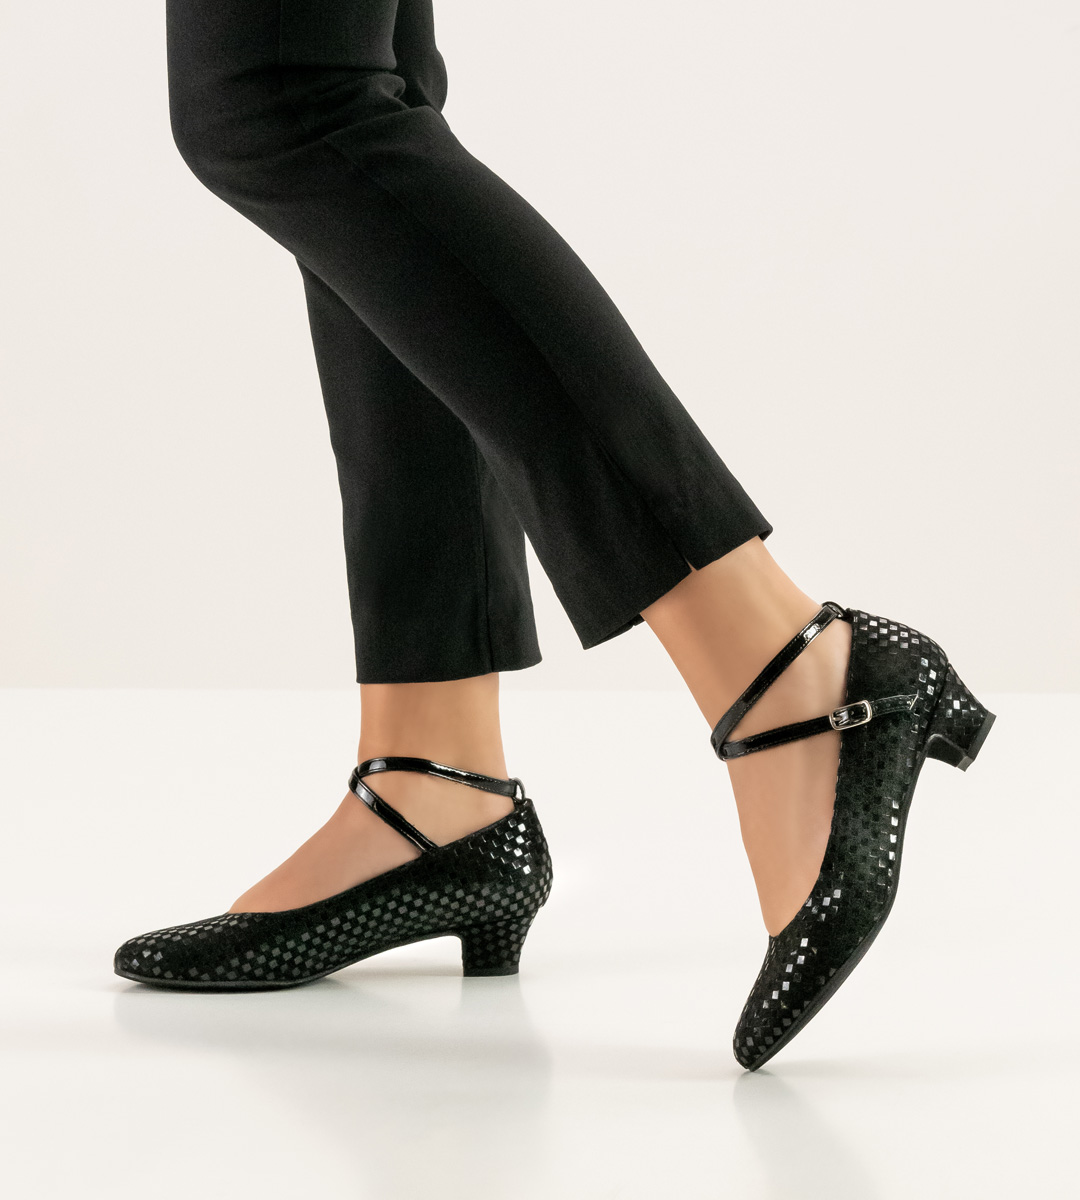 Closed toe ladies dance shoe from Werner Kern with 3.4 cm heel